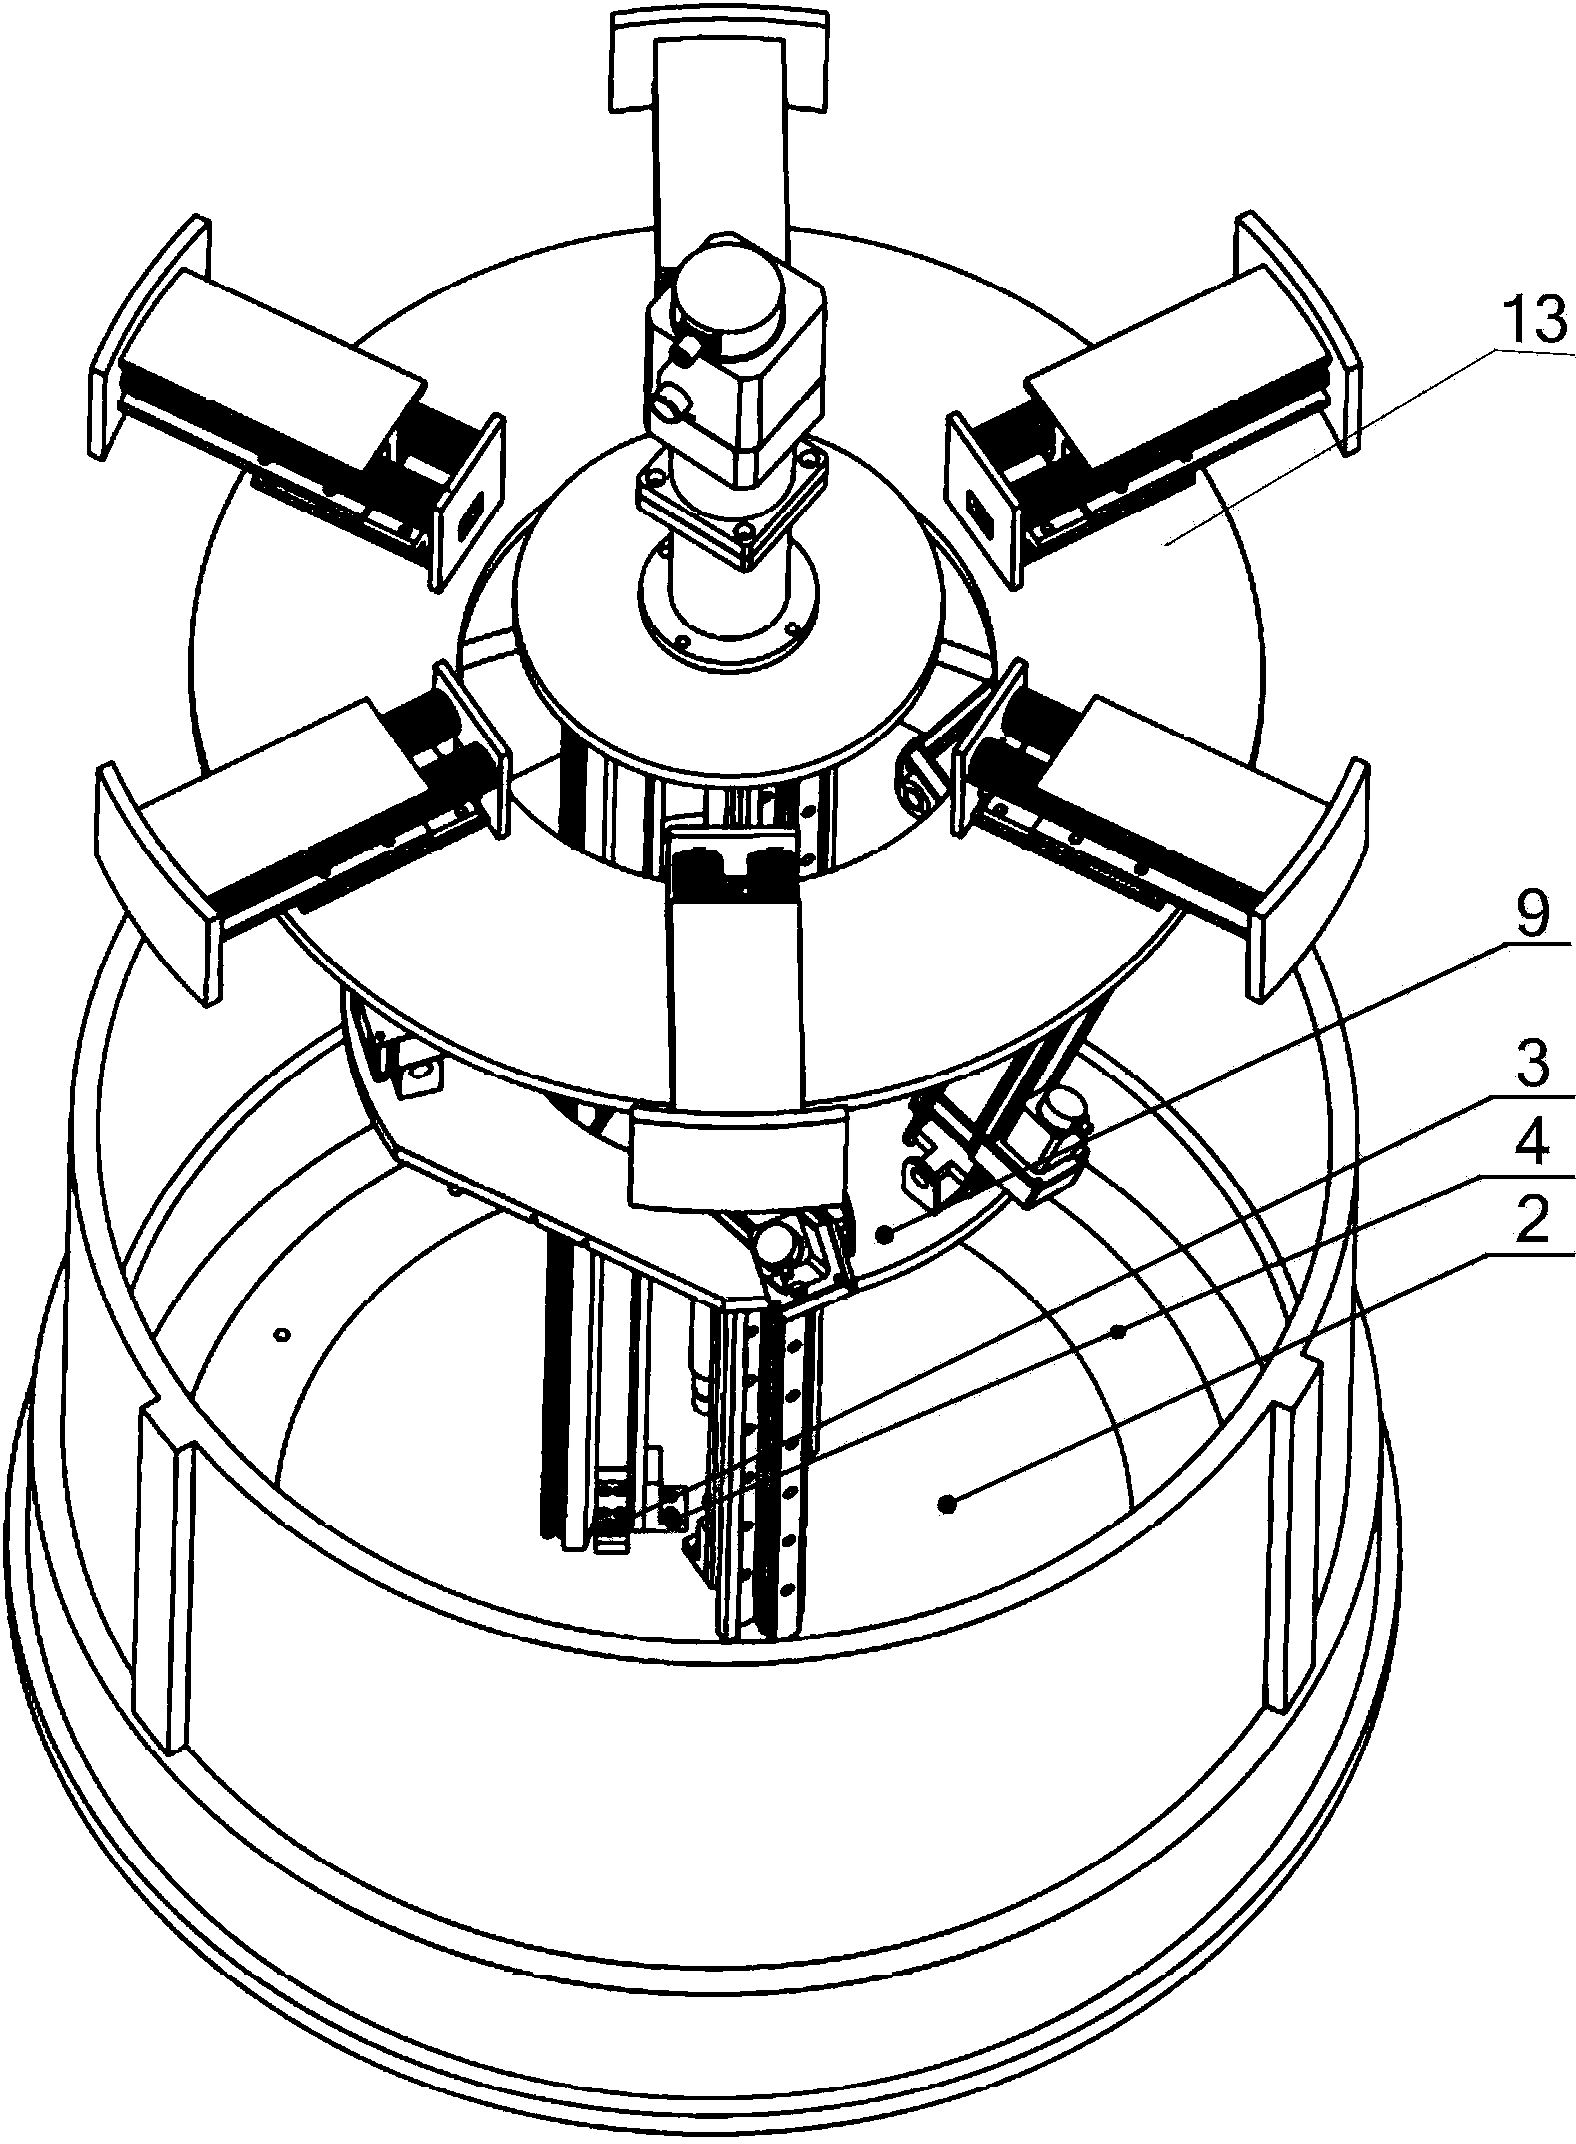 Vertical gesture adjusting mechanism for vertical assembling of large-diameter thin-wall part cylinder